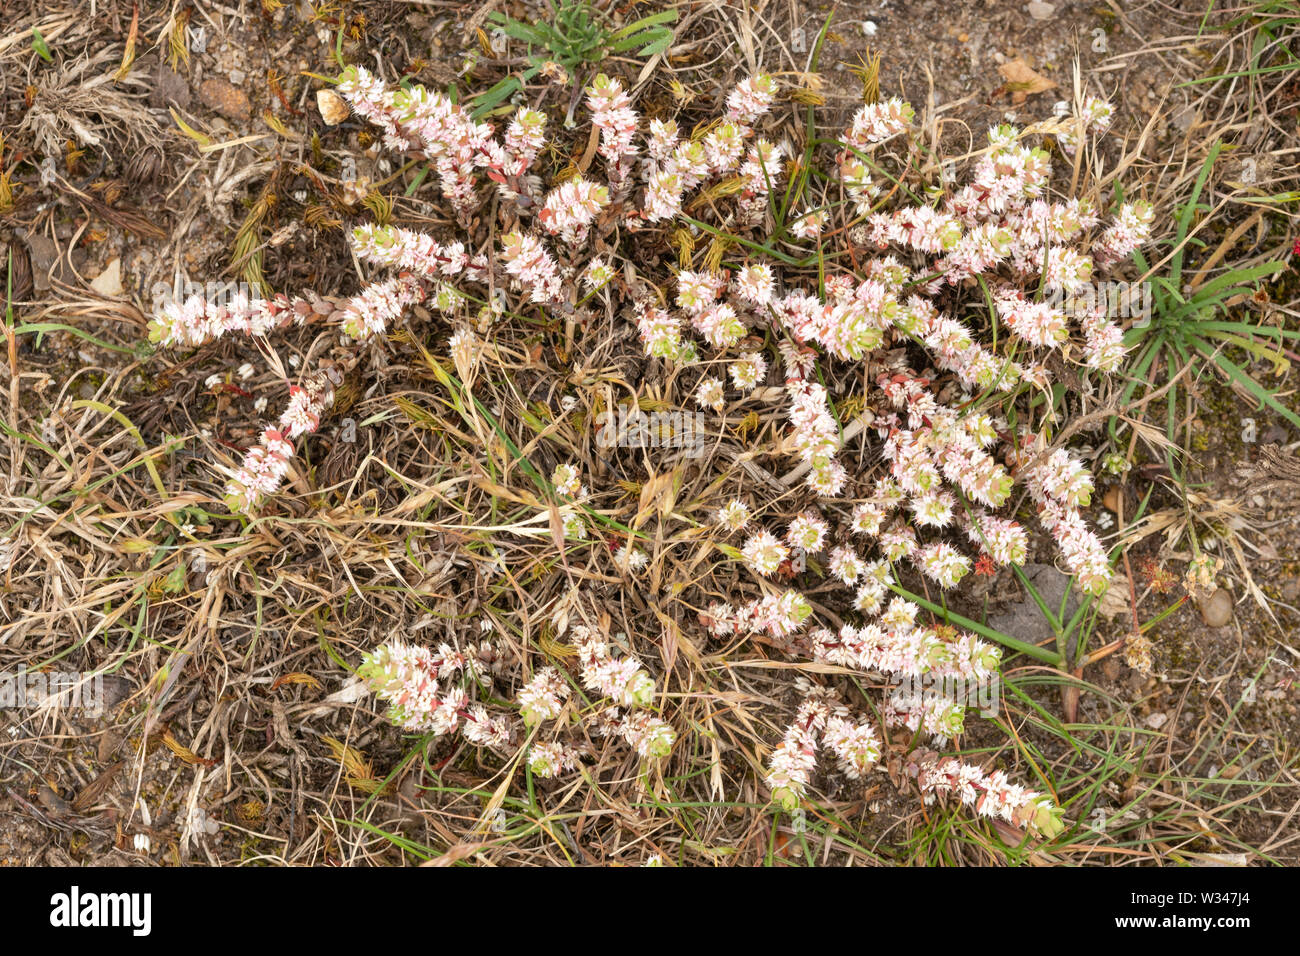 The rare plant, coral necklace (Illecebrum verticillatum) on heathland, UK, in July Stock Photo